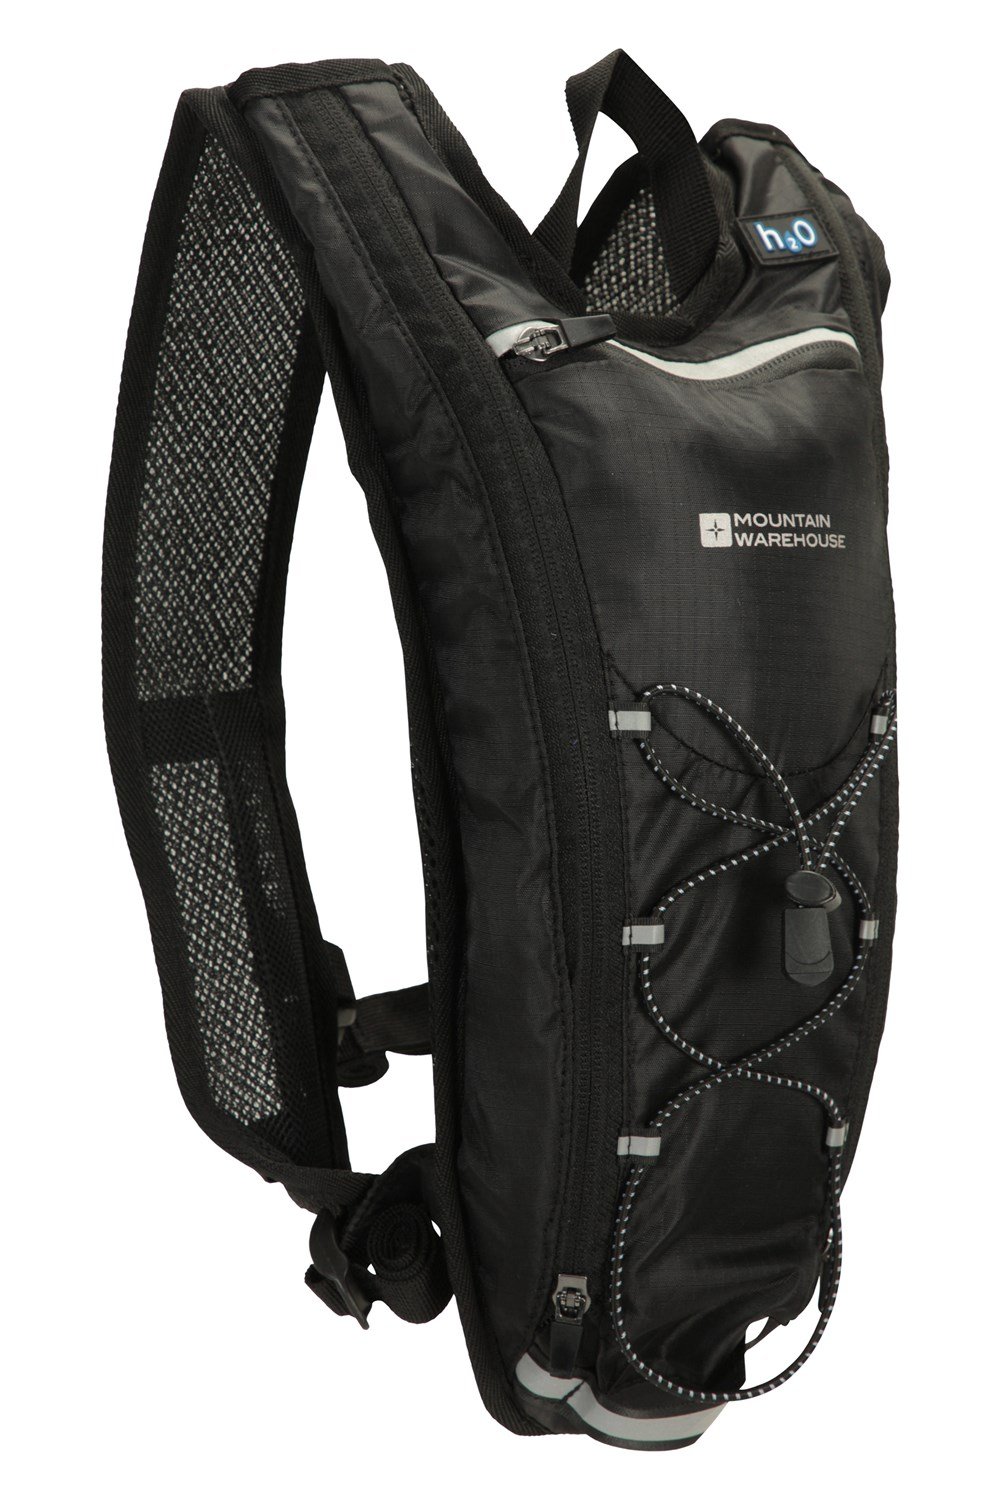 Mountain Warehouse Unisex Track Hydro Bag in Black w/Airmesh Back-2 l ...